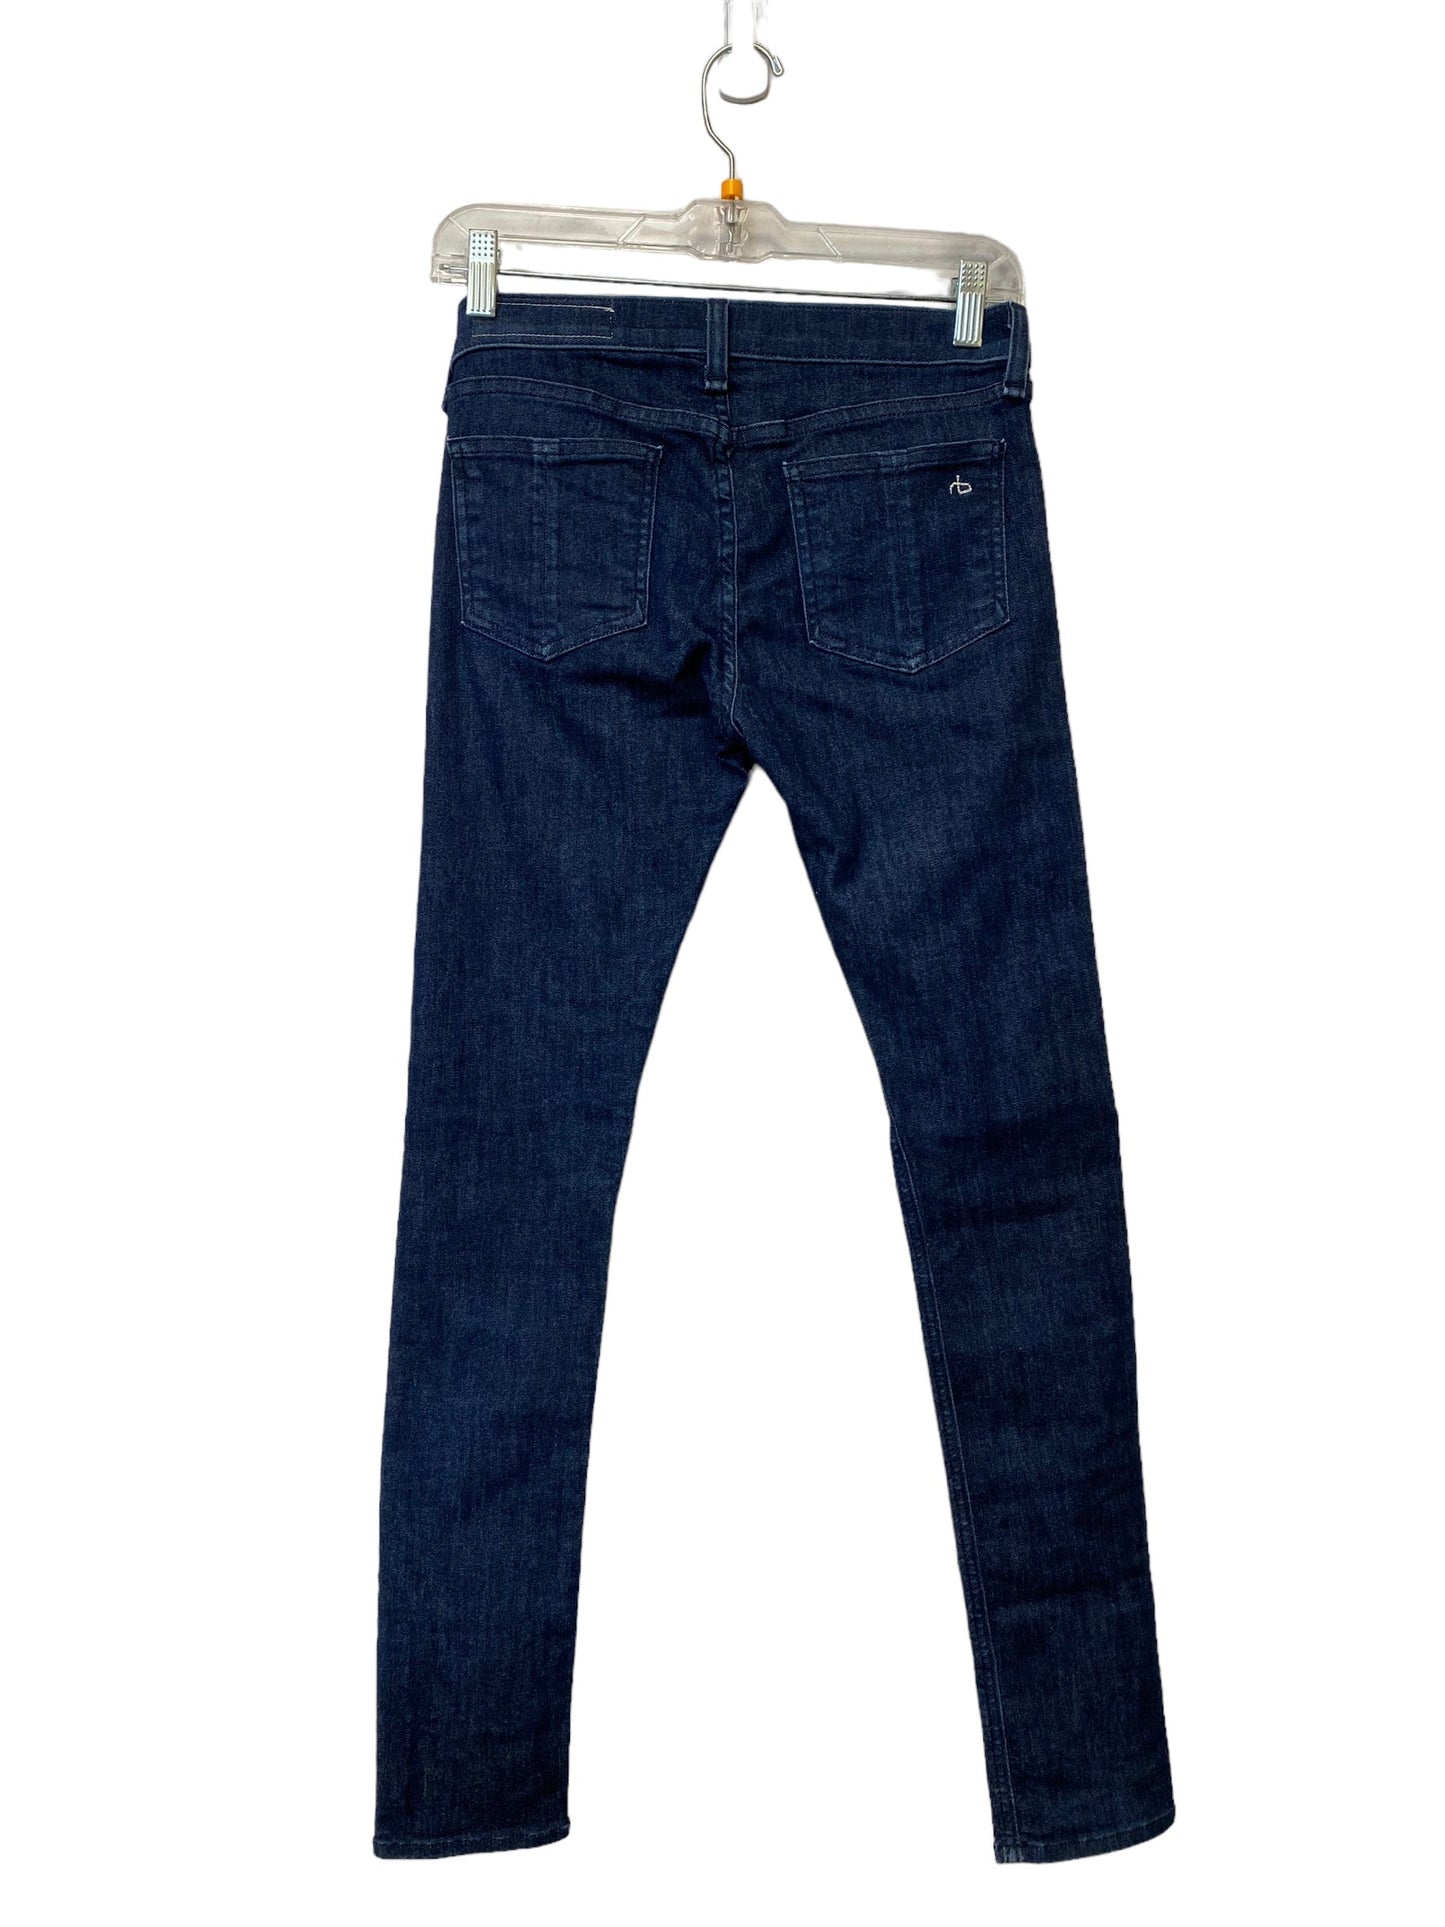 Jeans Skinny By Rag & Bones Jeans  Size: 26